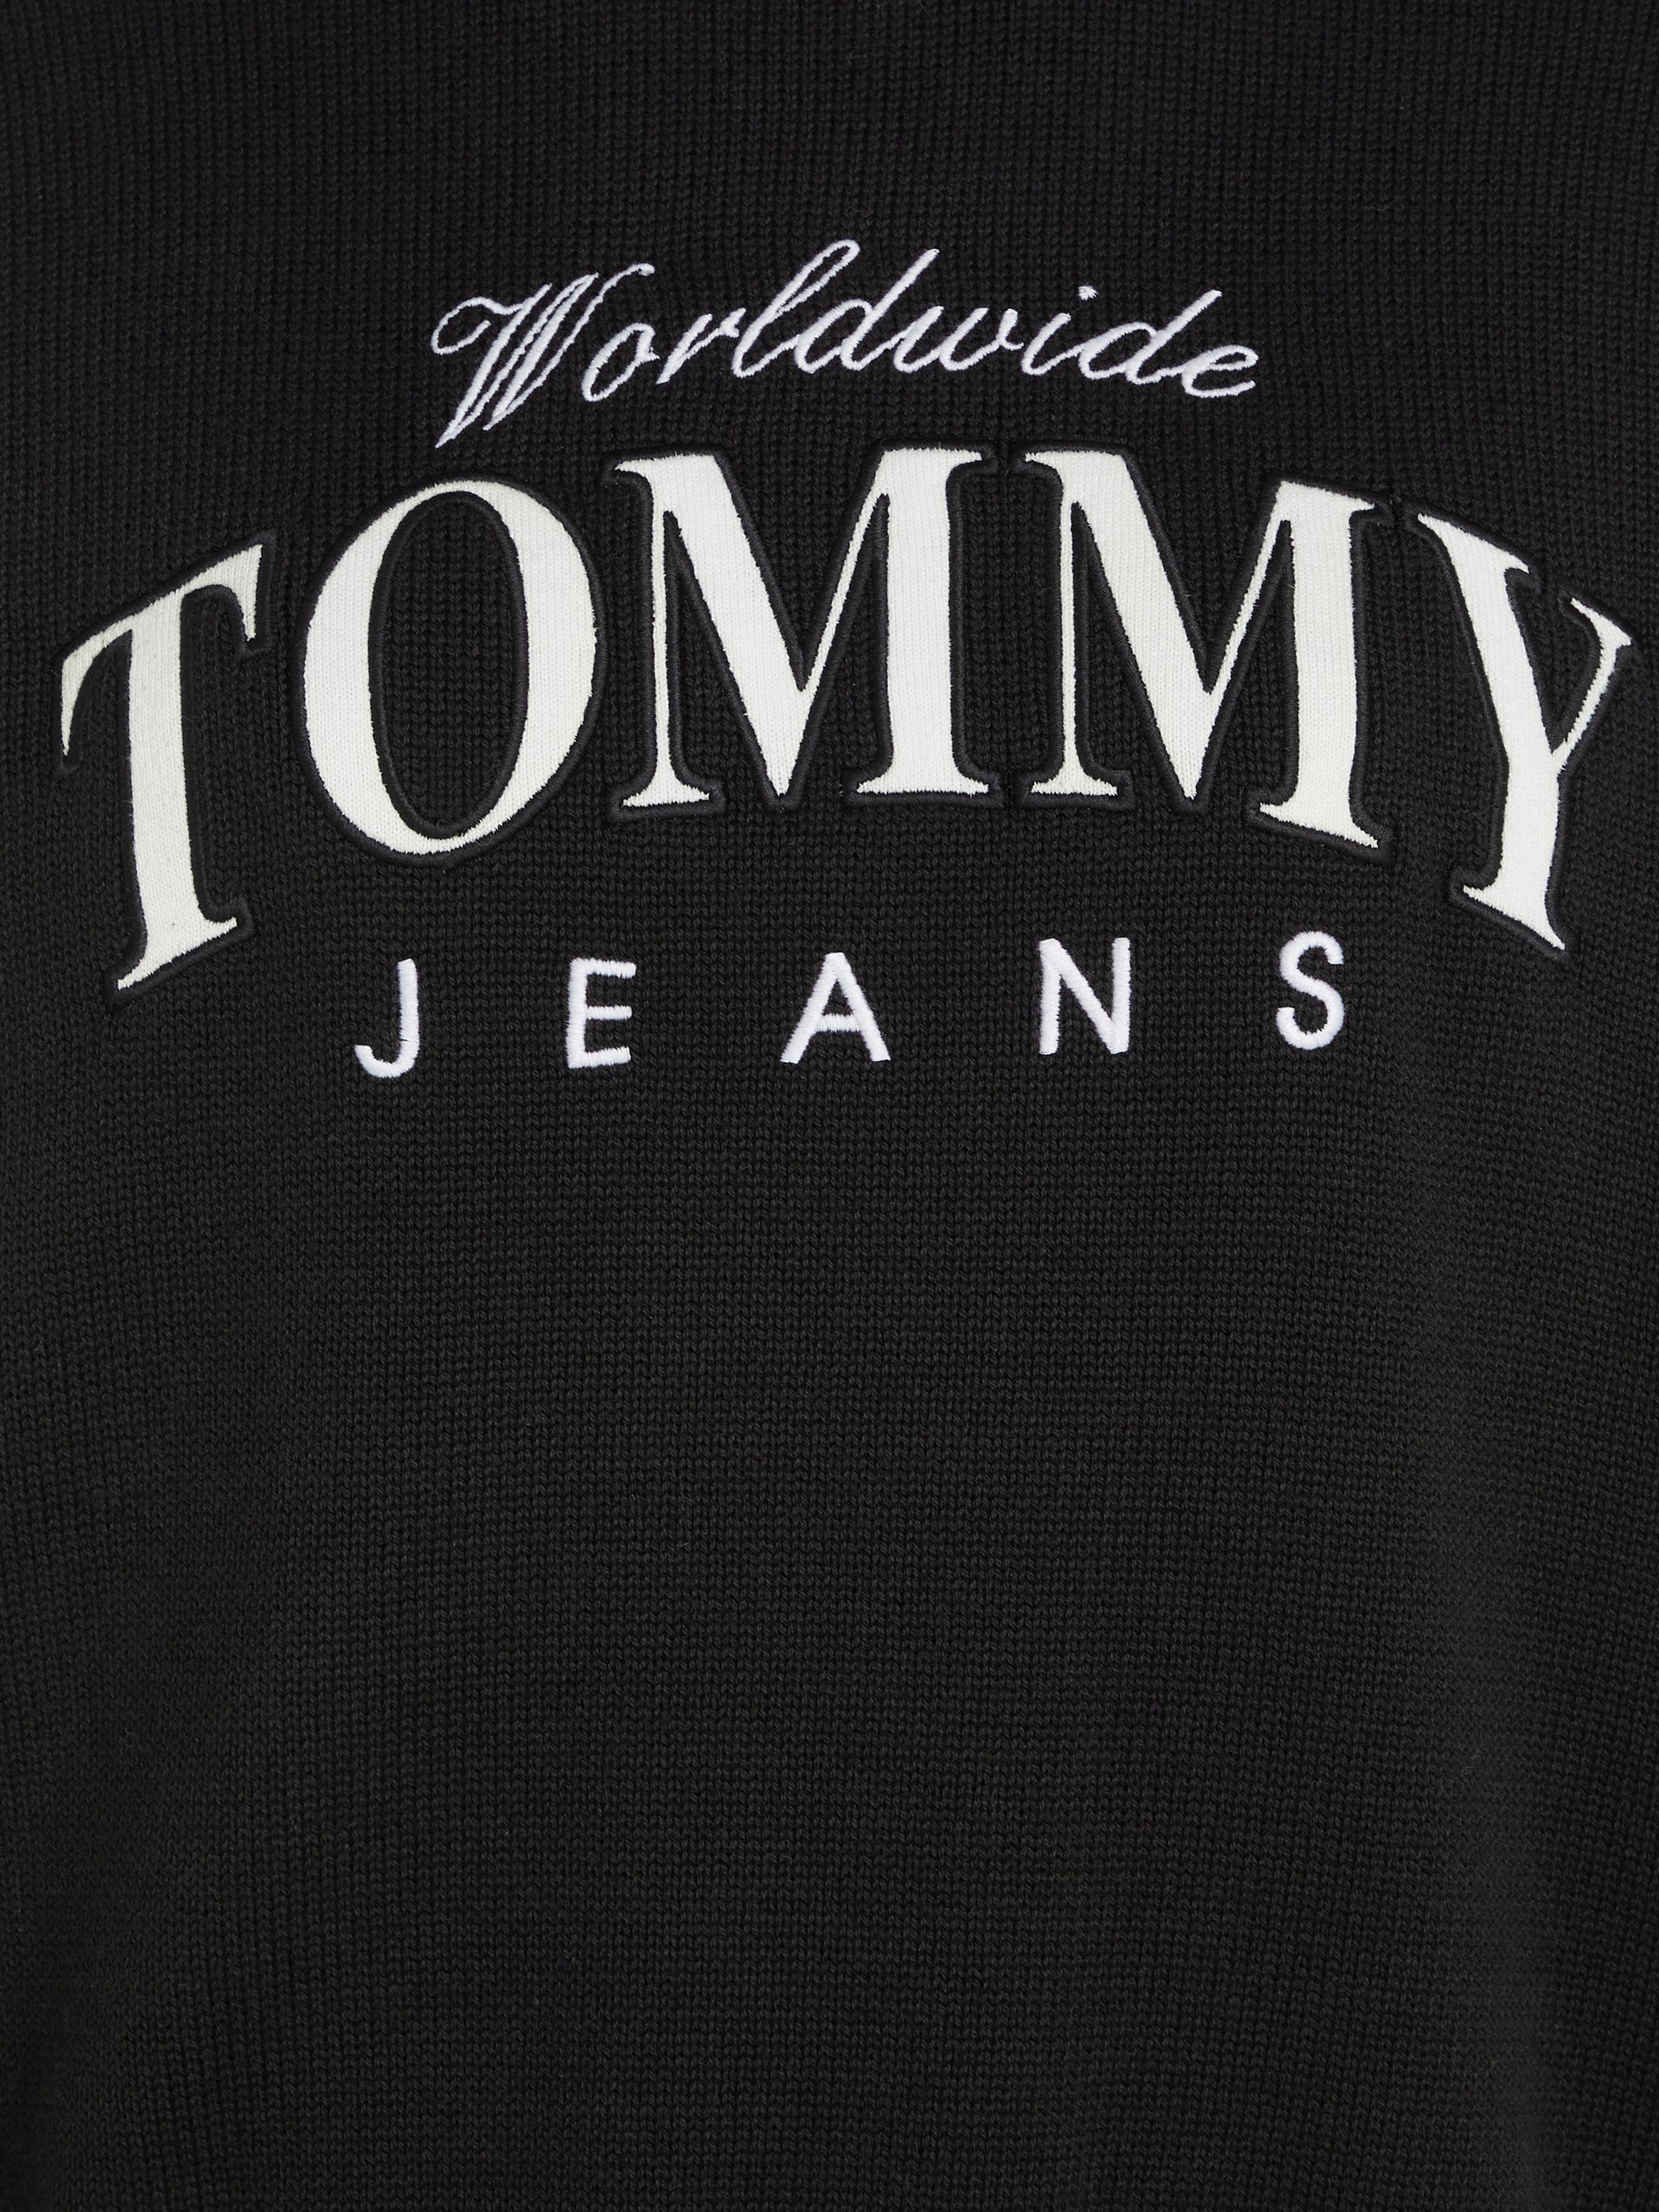 Logoschriftzug SWEATER TJW Tommy Jeans mit Strickpullover VARSITY